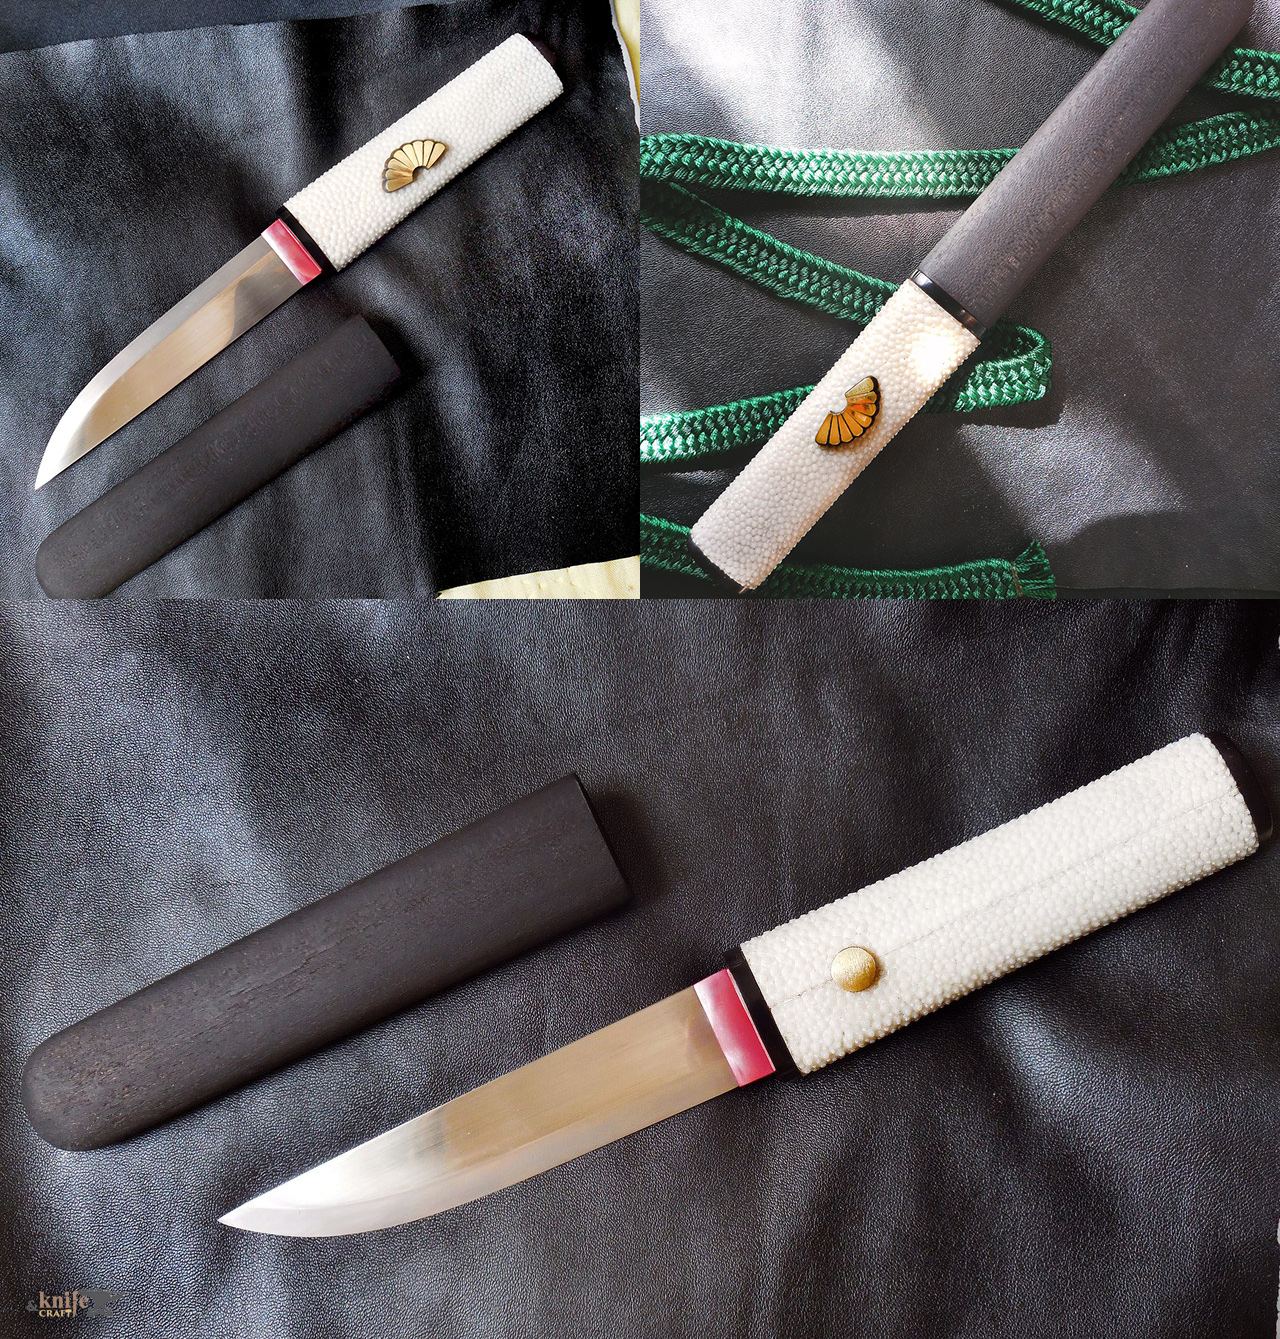 Нож из японского напильника " Айкути" mini (японский стиль)от Даниил Masamune